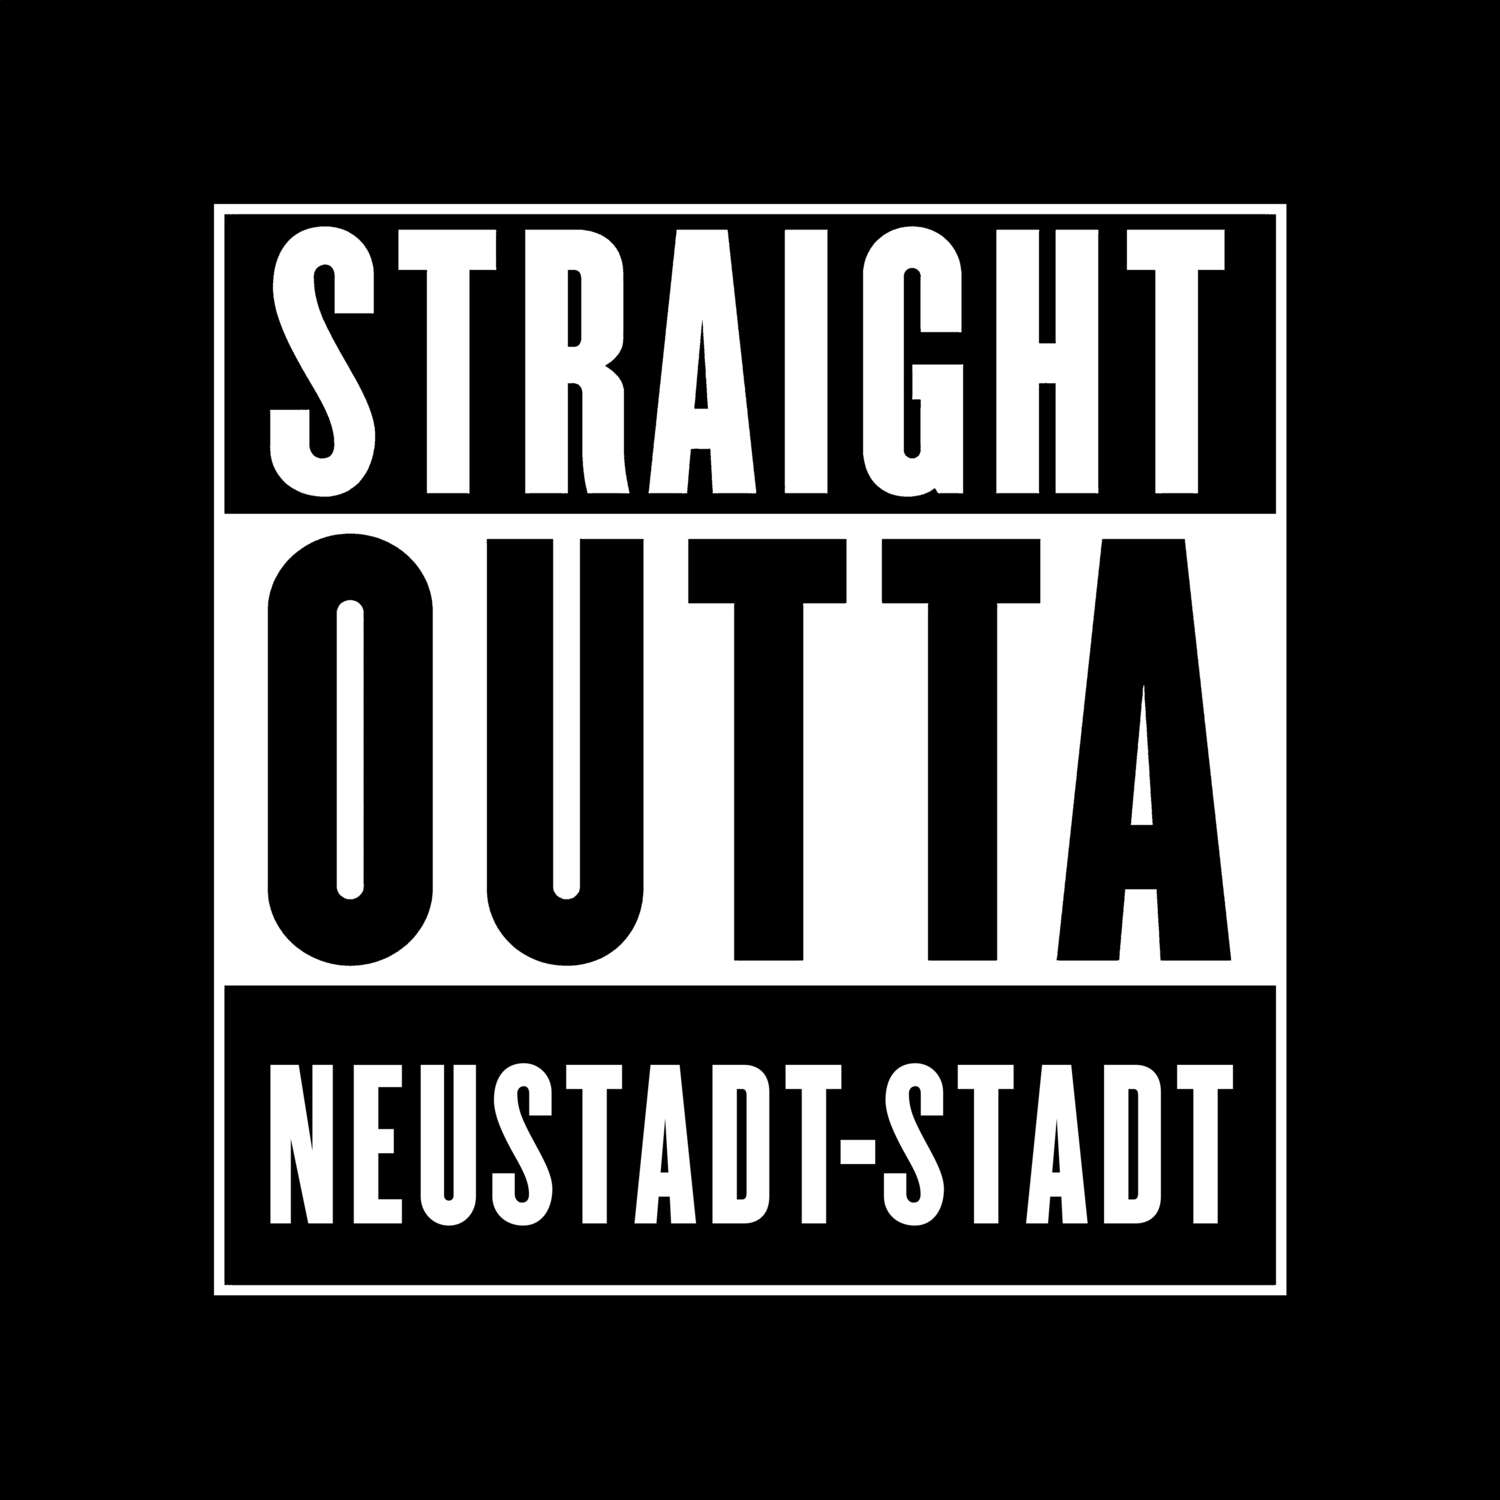 Neustadt-Stadt T-Shirt »Straight Outta«